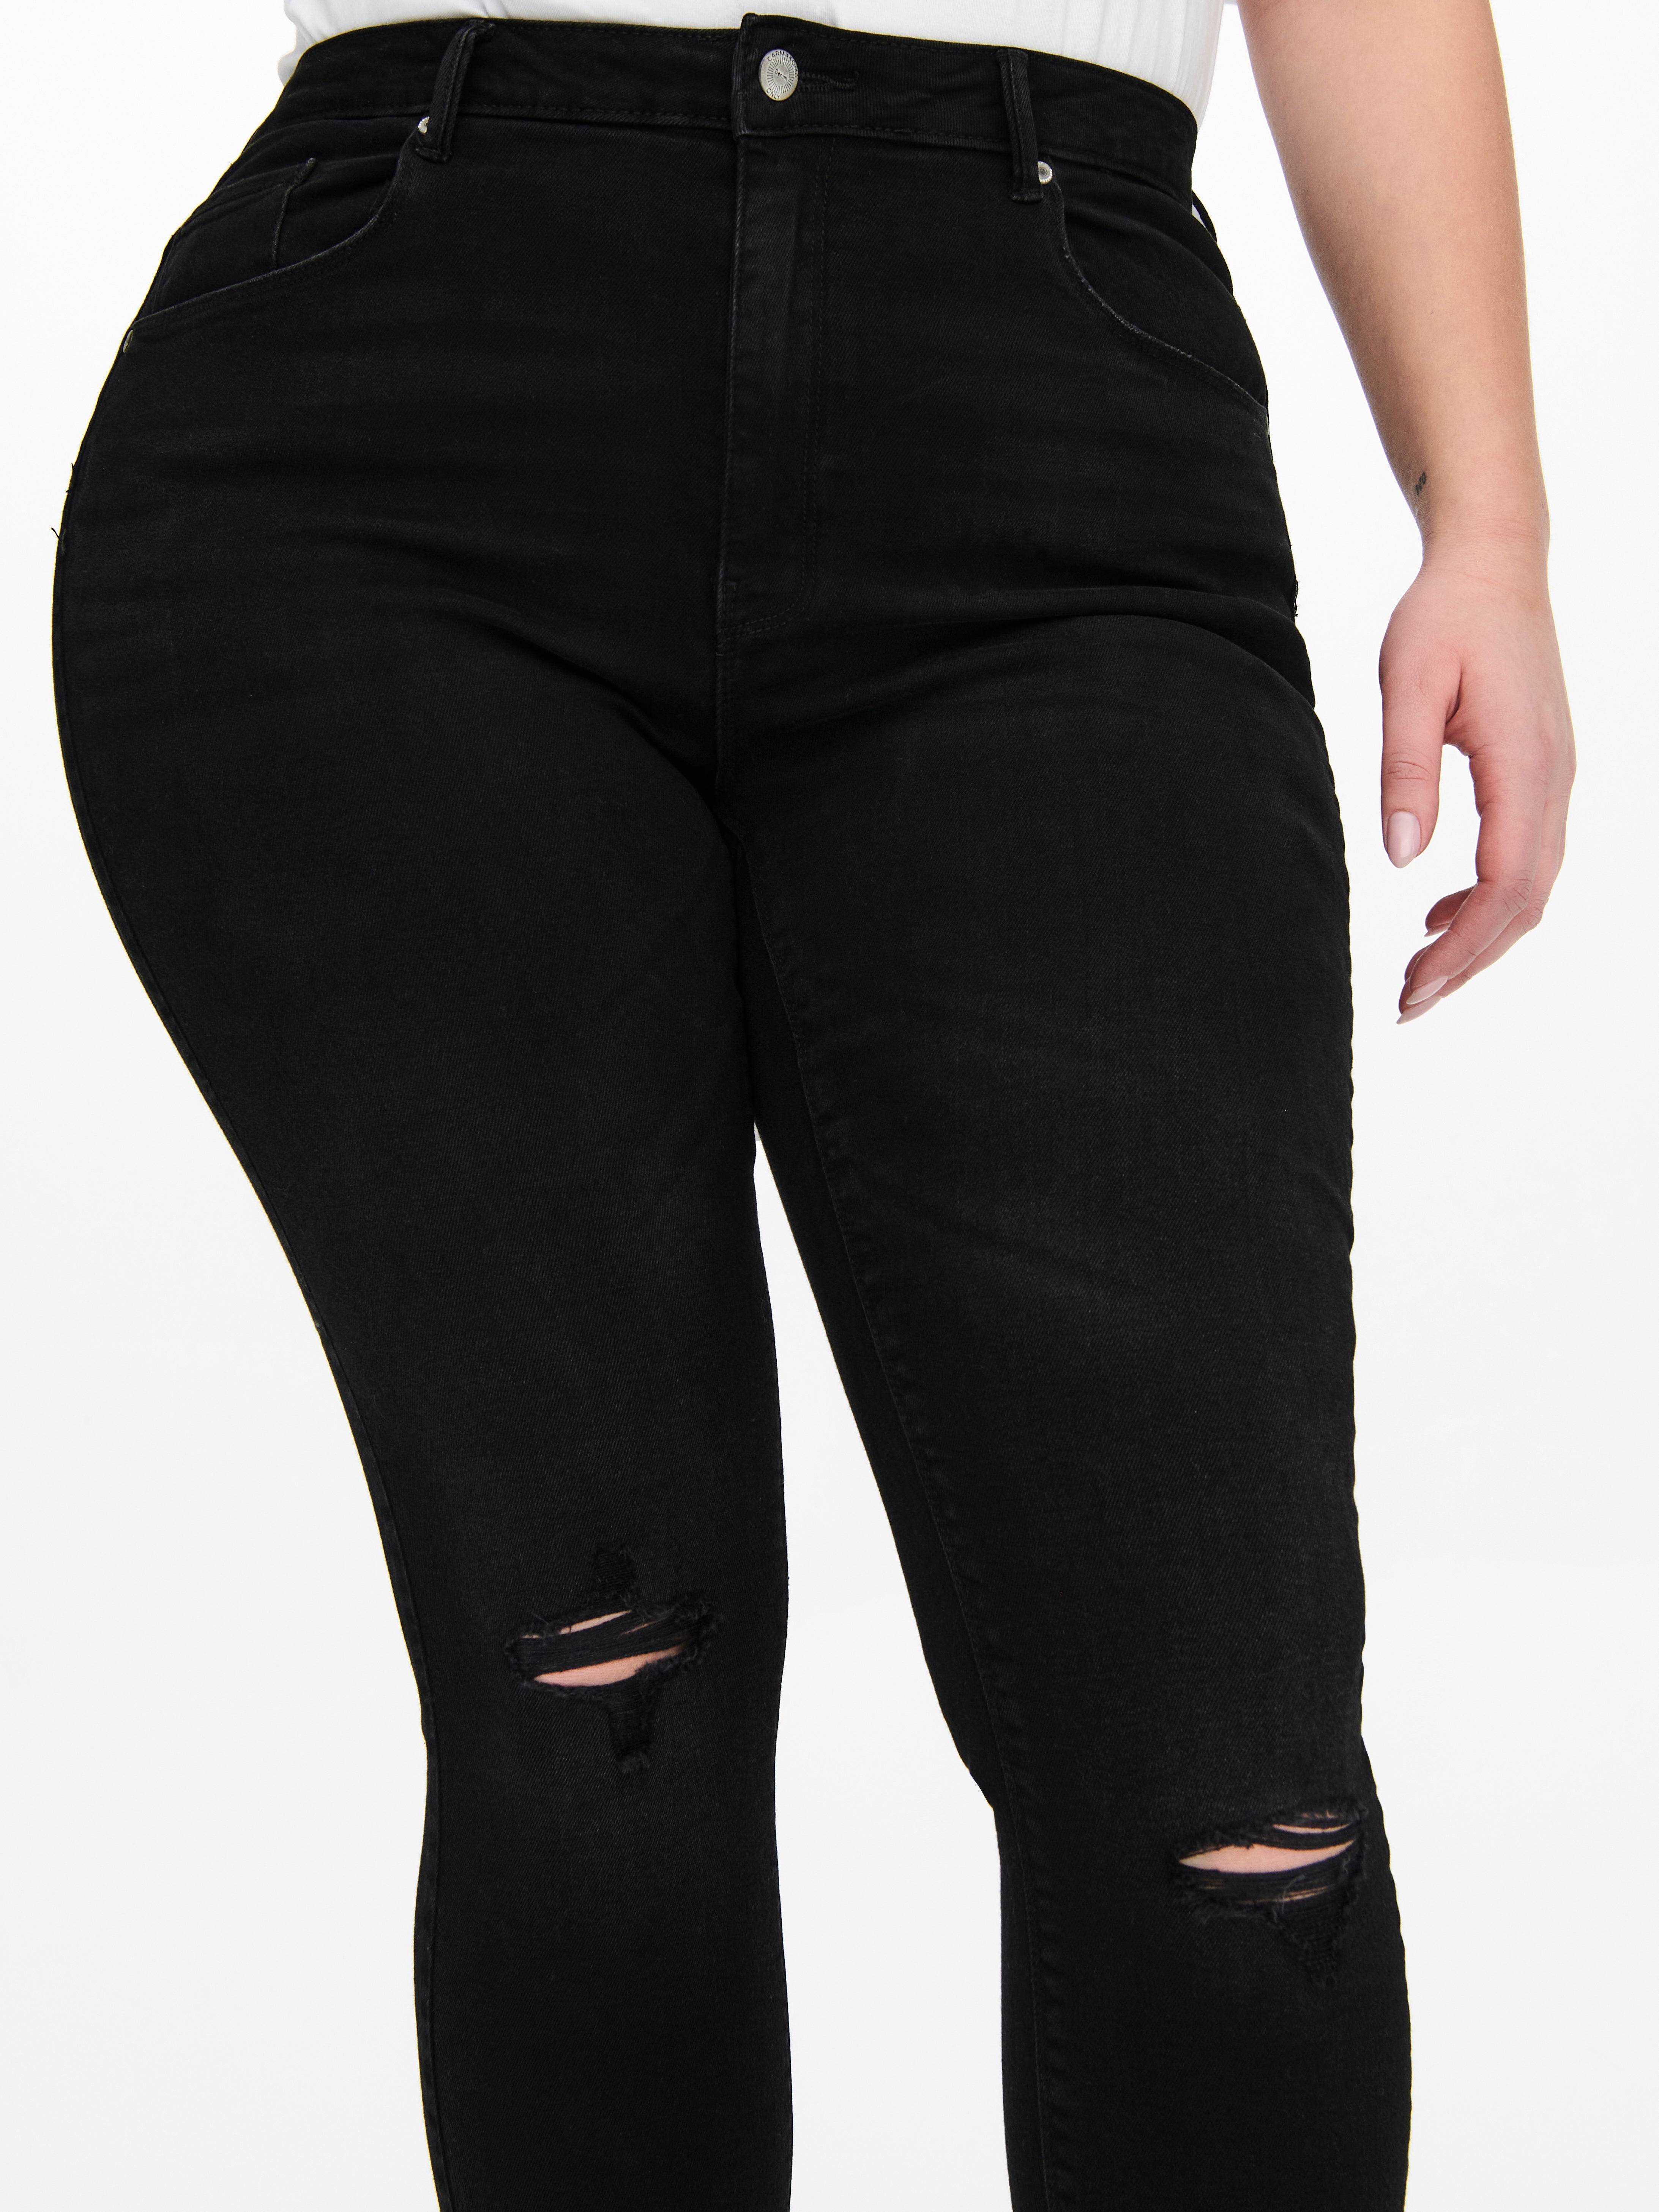 Buy Men's Authentic Jet Black Knee Cut Skinny Jeans Online | SNITCH